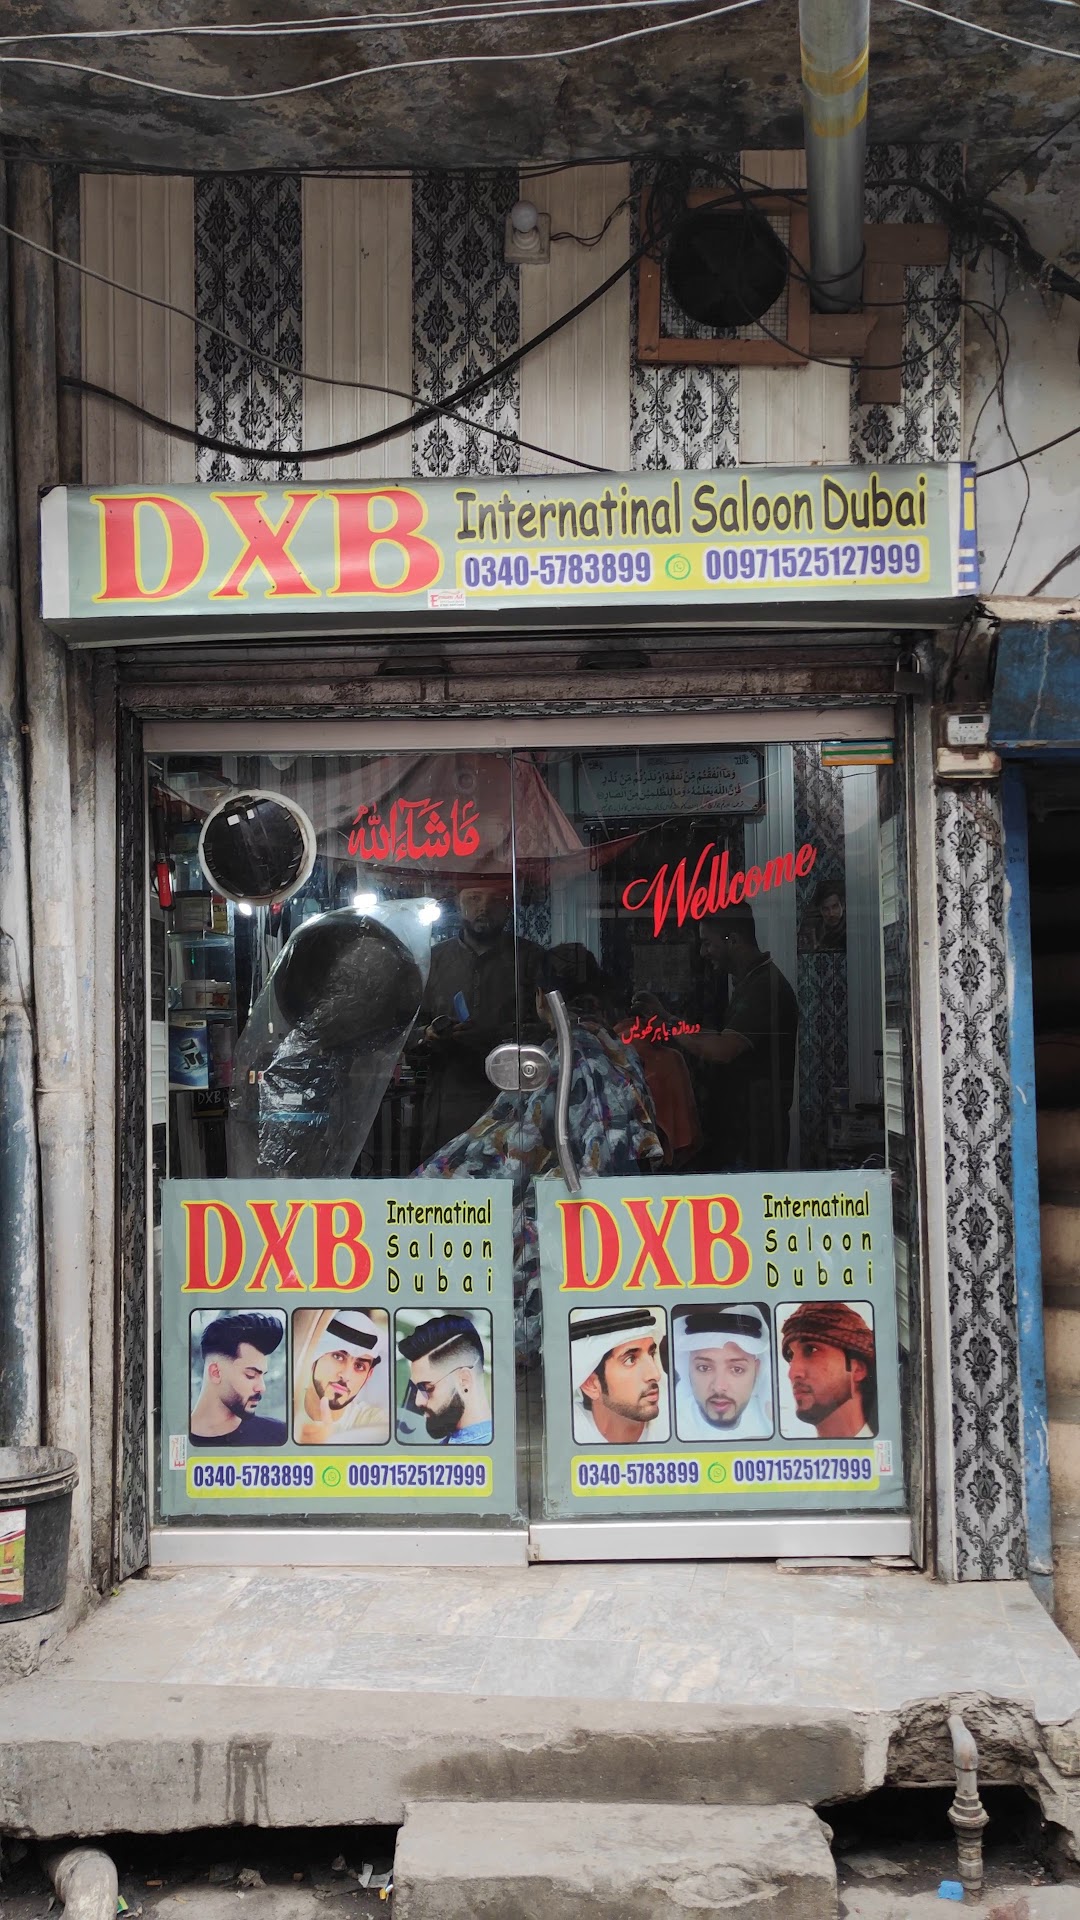 International Saloon Dubai DXB